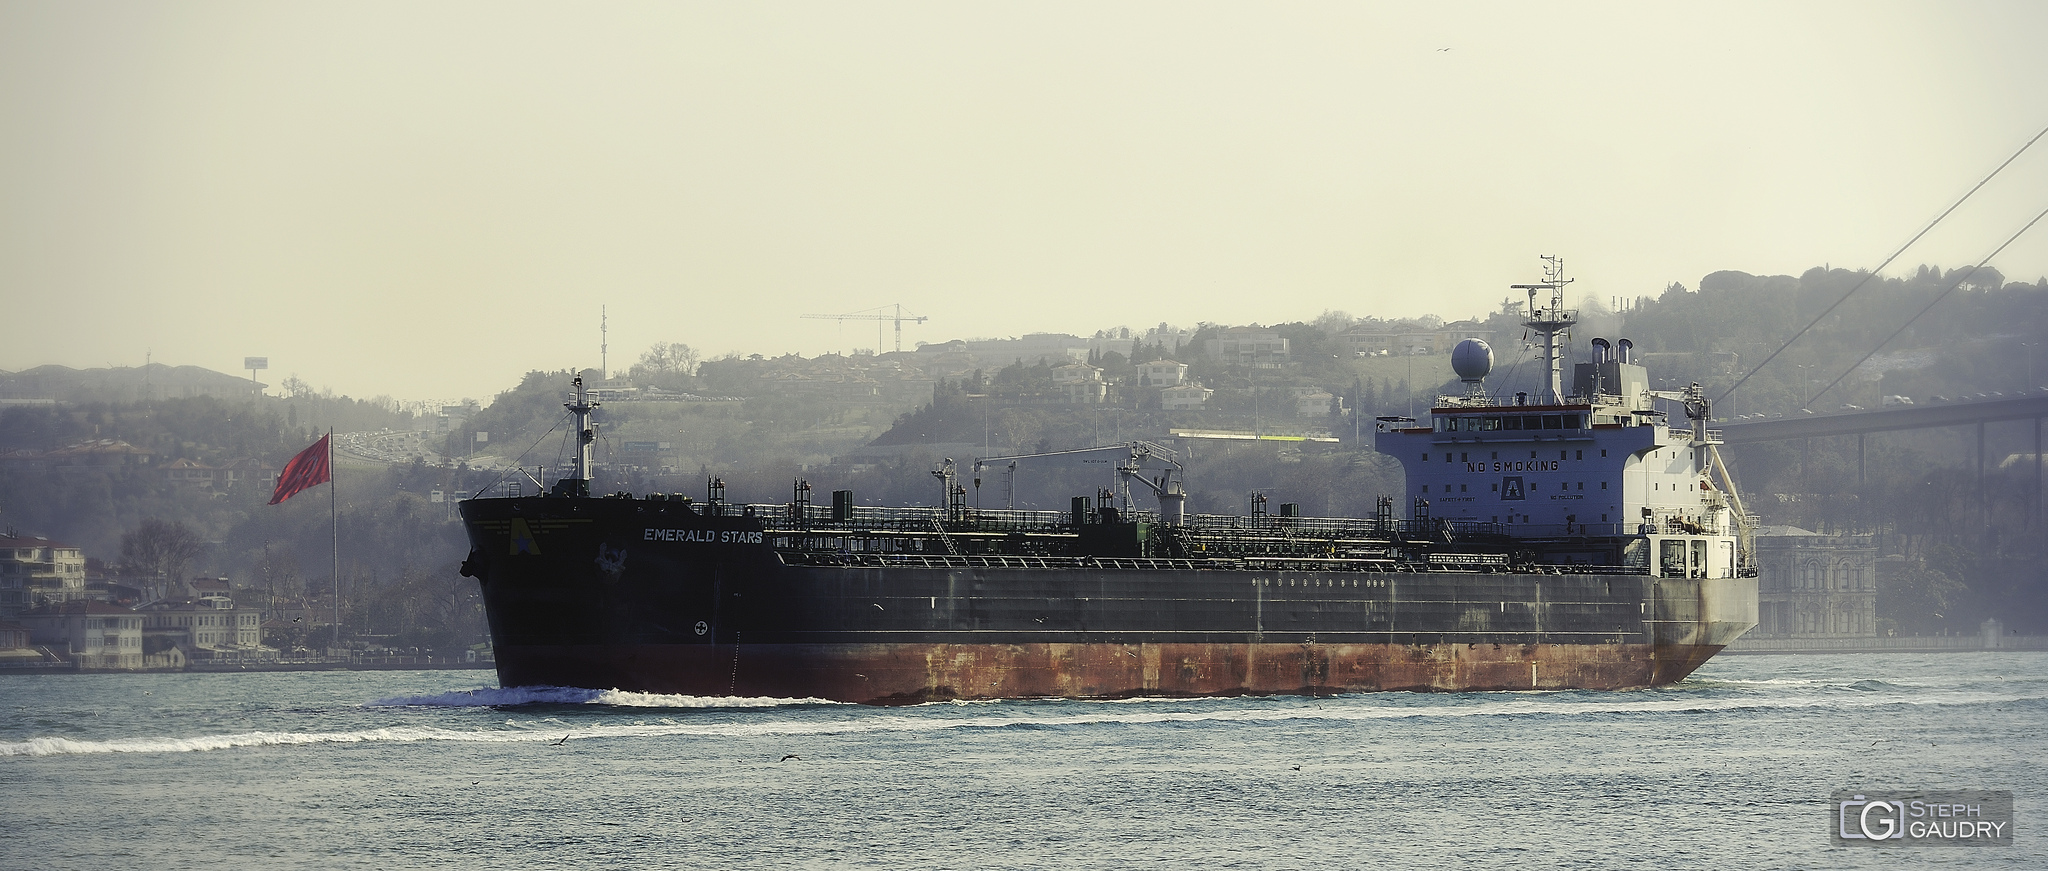 EMERALD STARS Chemical/Oil Tanker - Bosphorus near Istanbul [Klik om de diavoorstelling te starten]